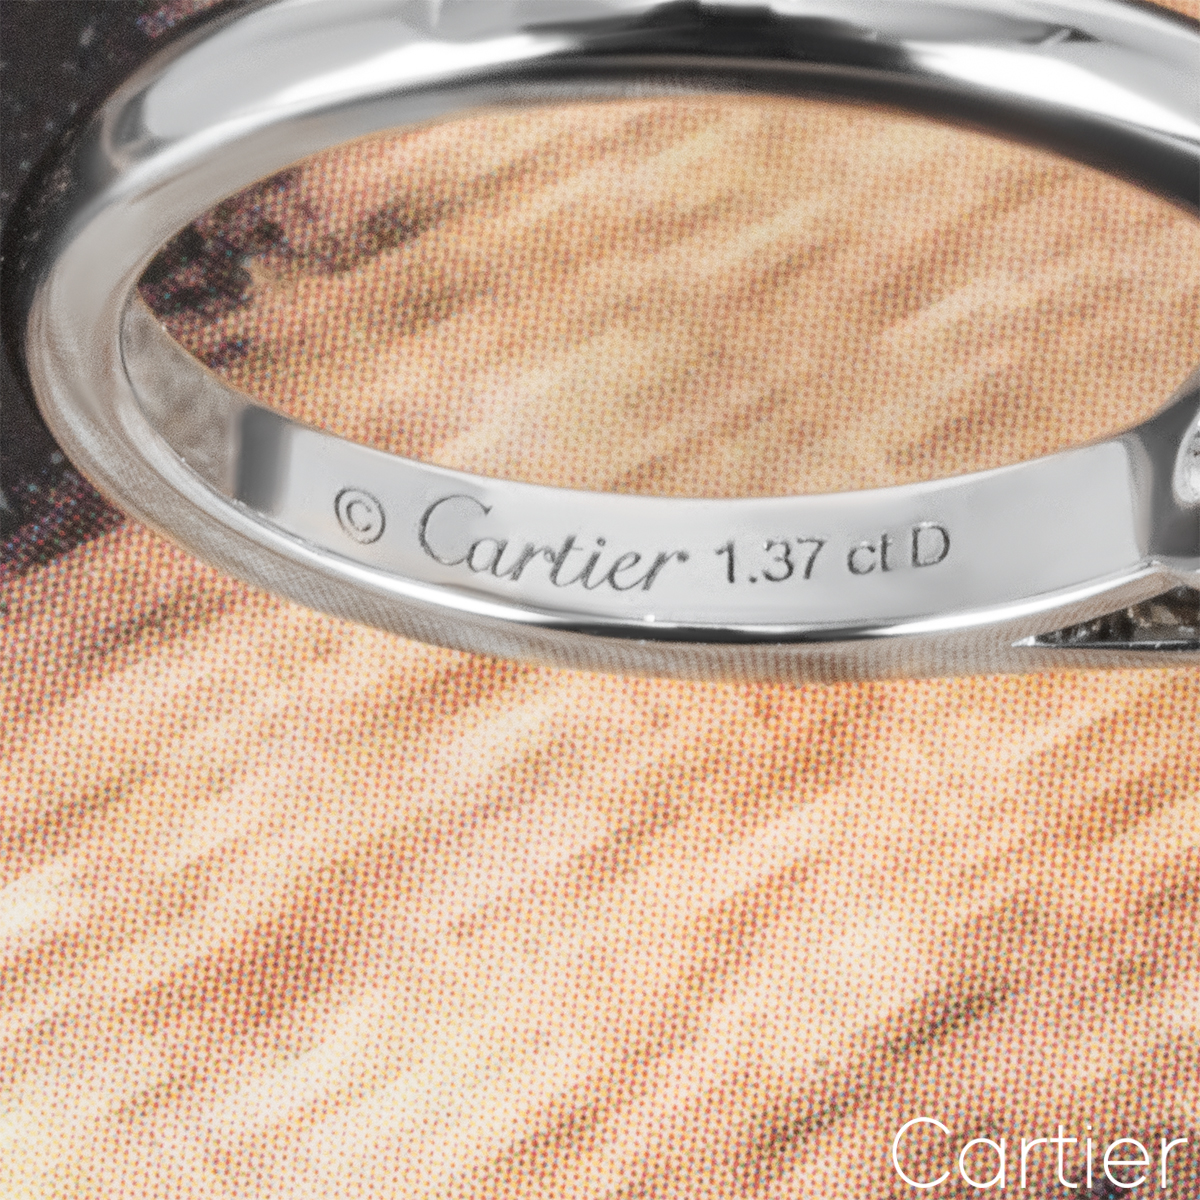 Cartier Platinum Round Brilliant Cut Diamond Solitaire 1895 Ring 1.37ct G/VVS1 XXX